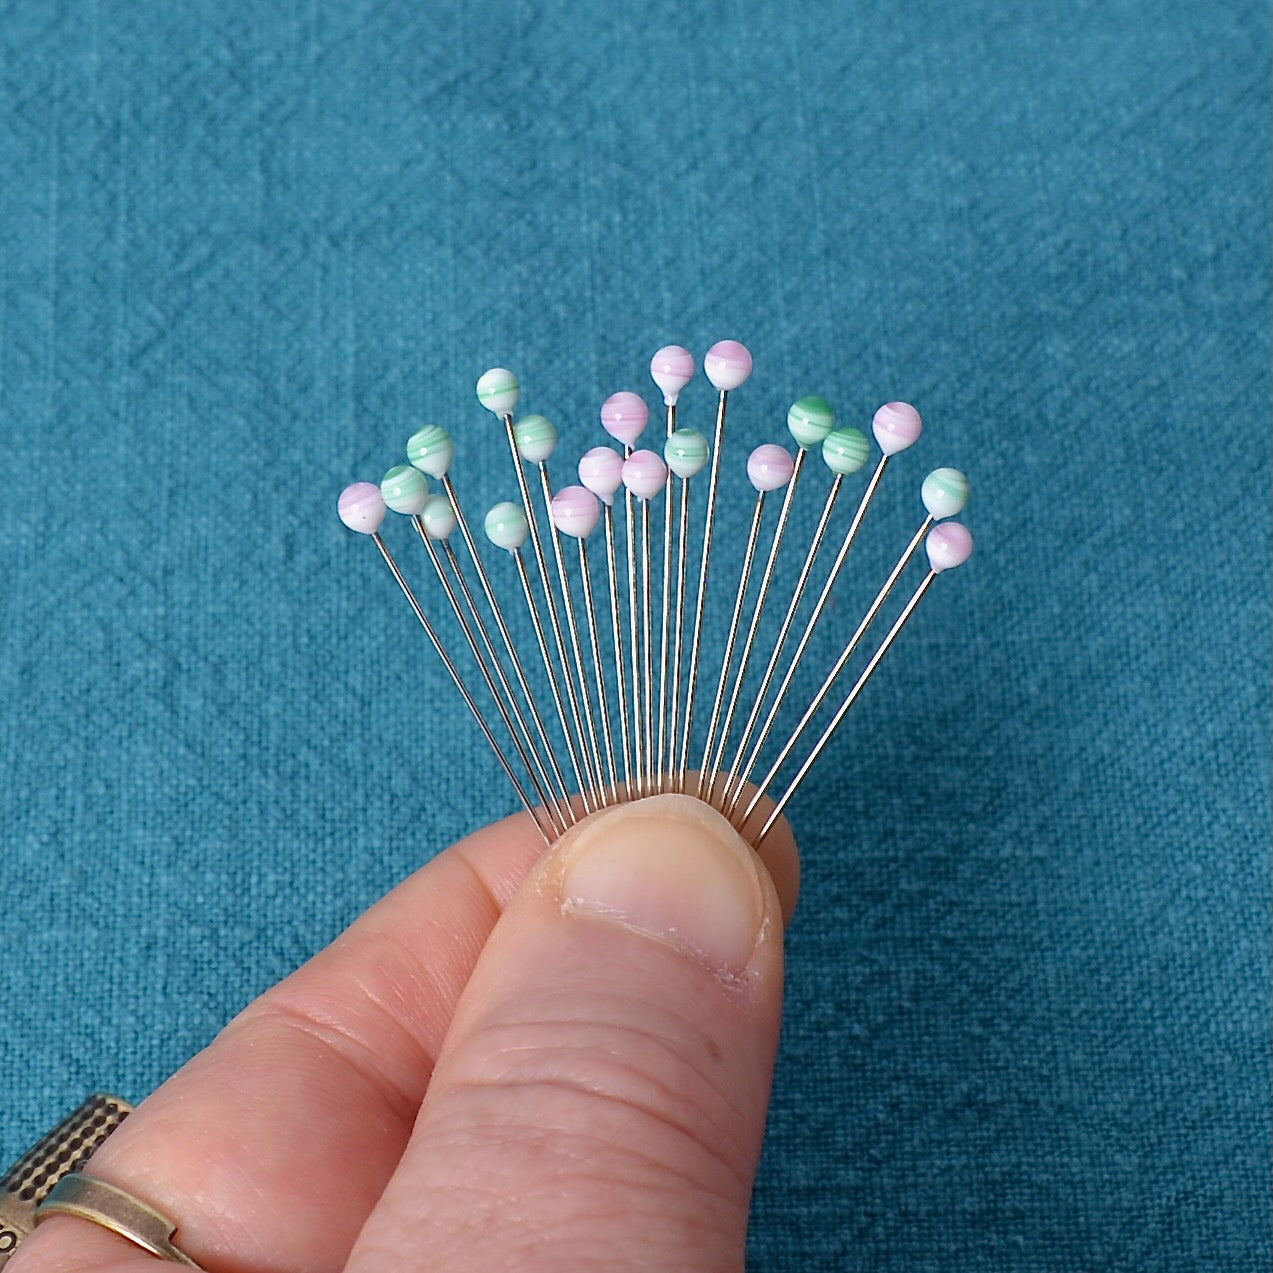 Glass Sewing Pins in a Cherry-Wood Box - Cohana上質なハンドメイド